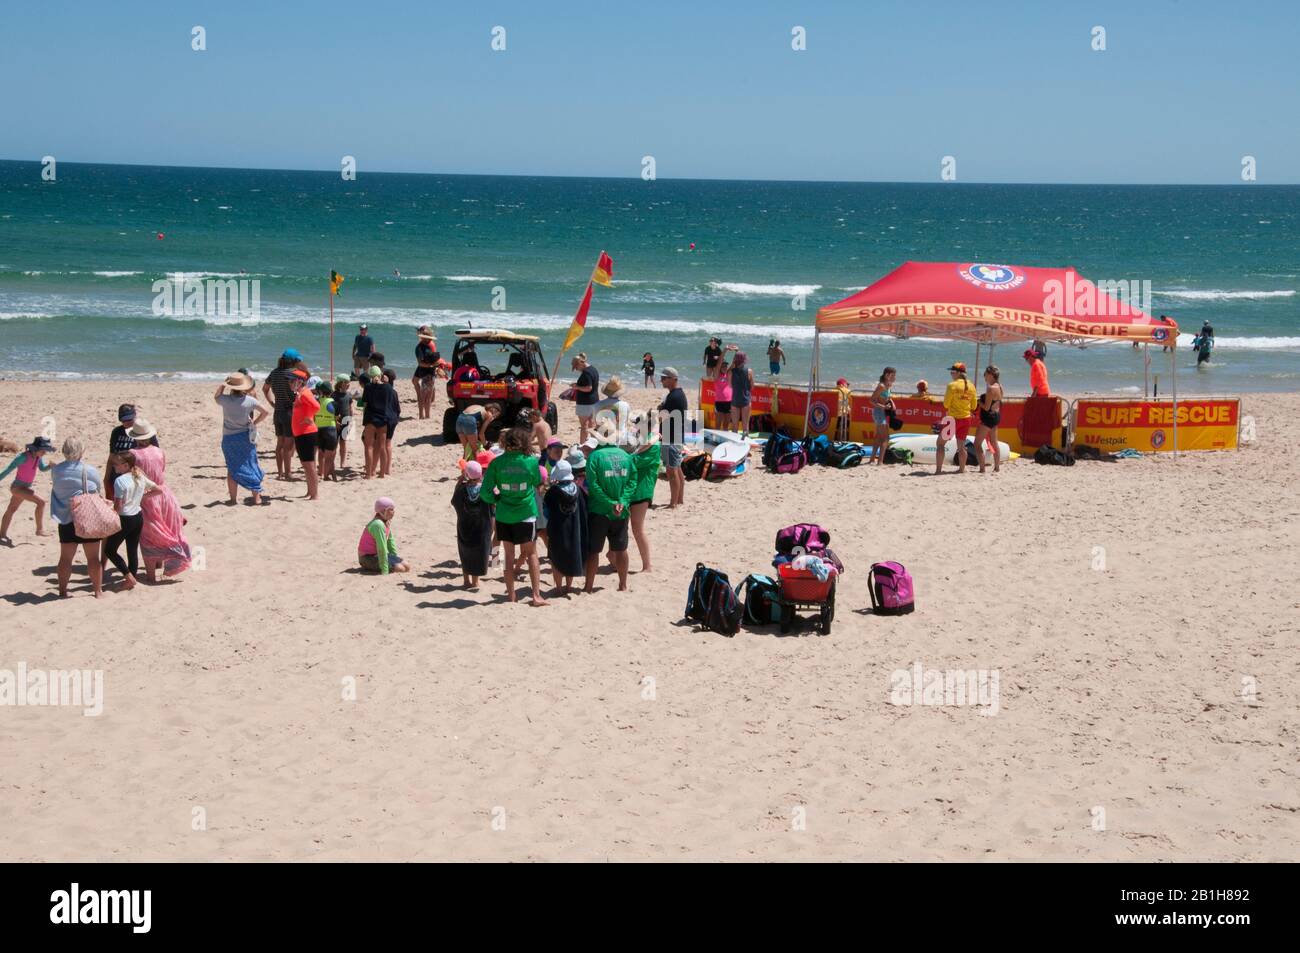 Surf Life Saving Club activities on the beach at Port Noarlunga, South Australia Stock Photo